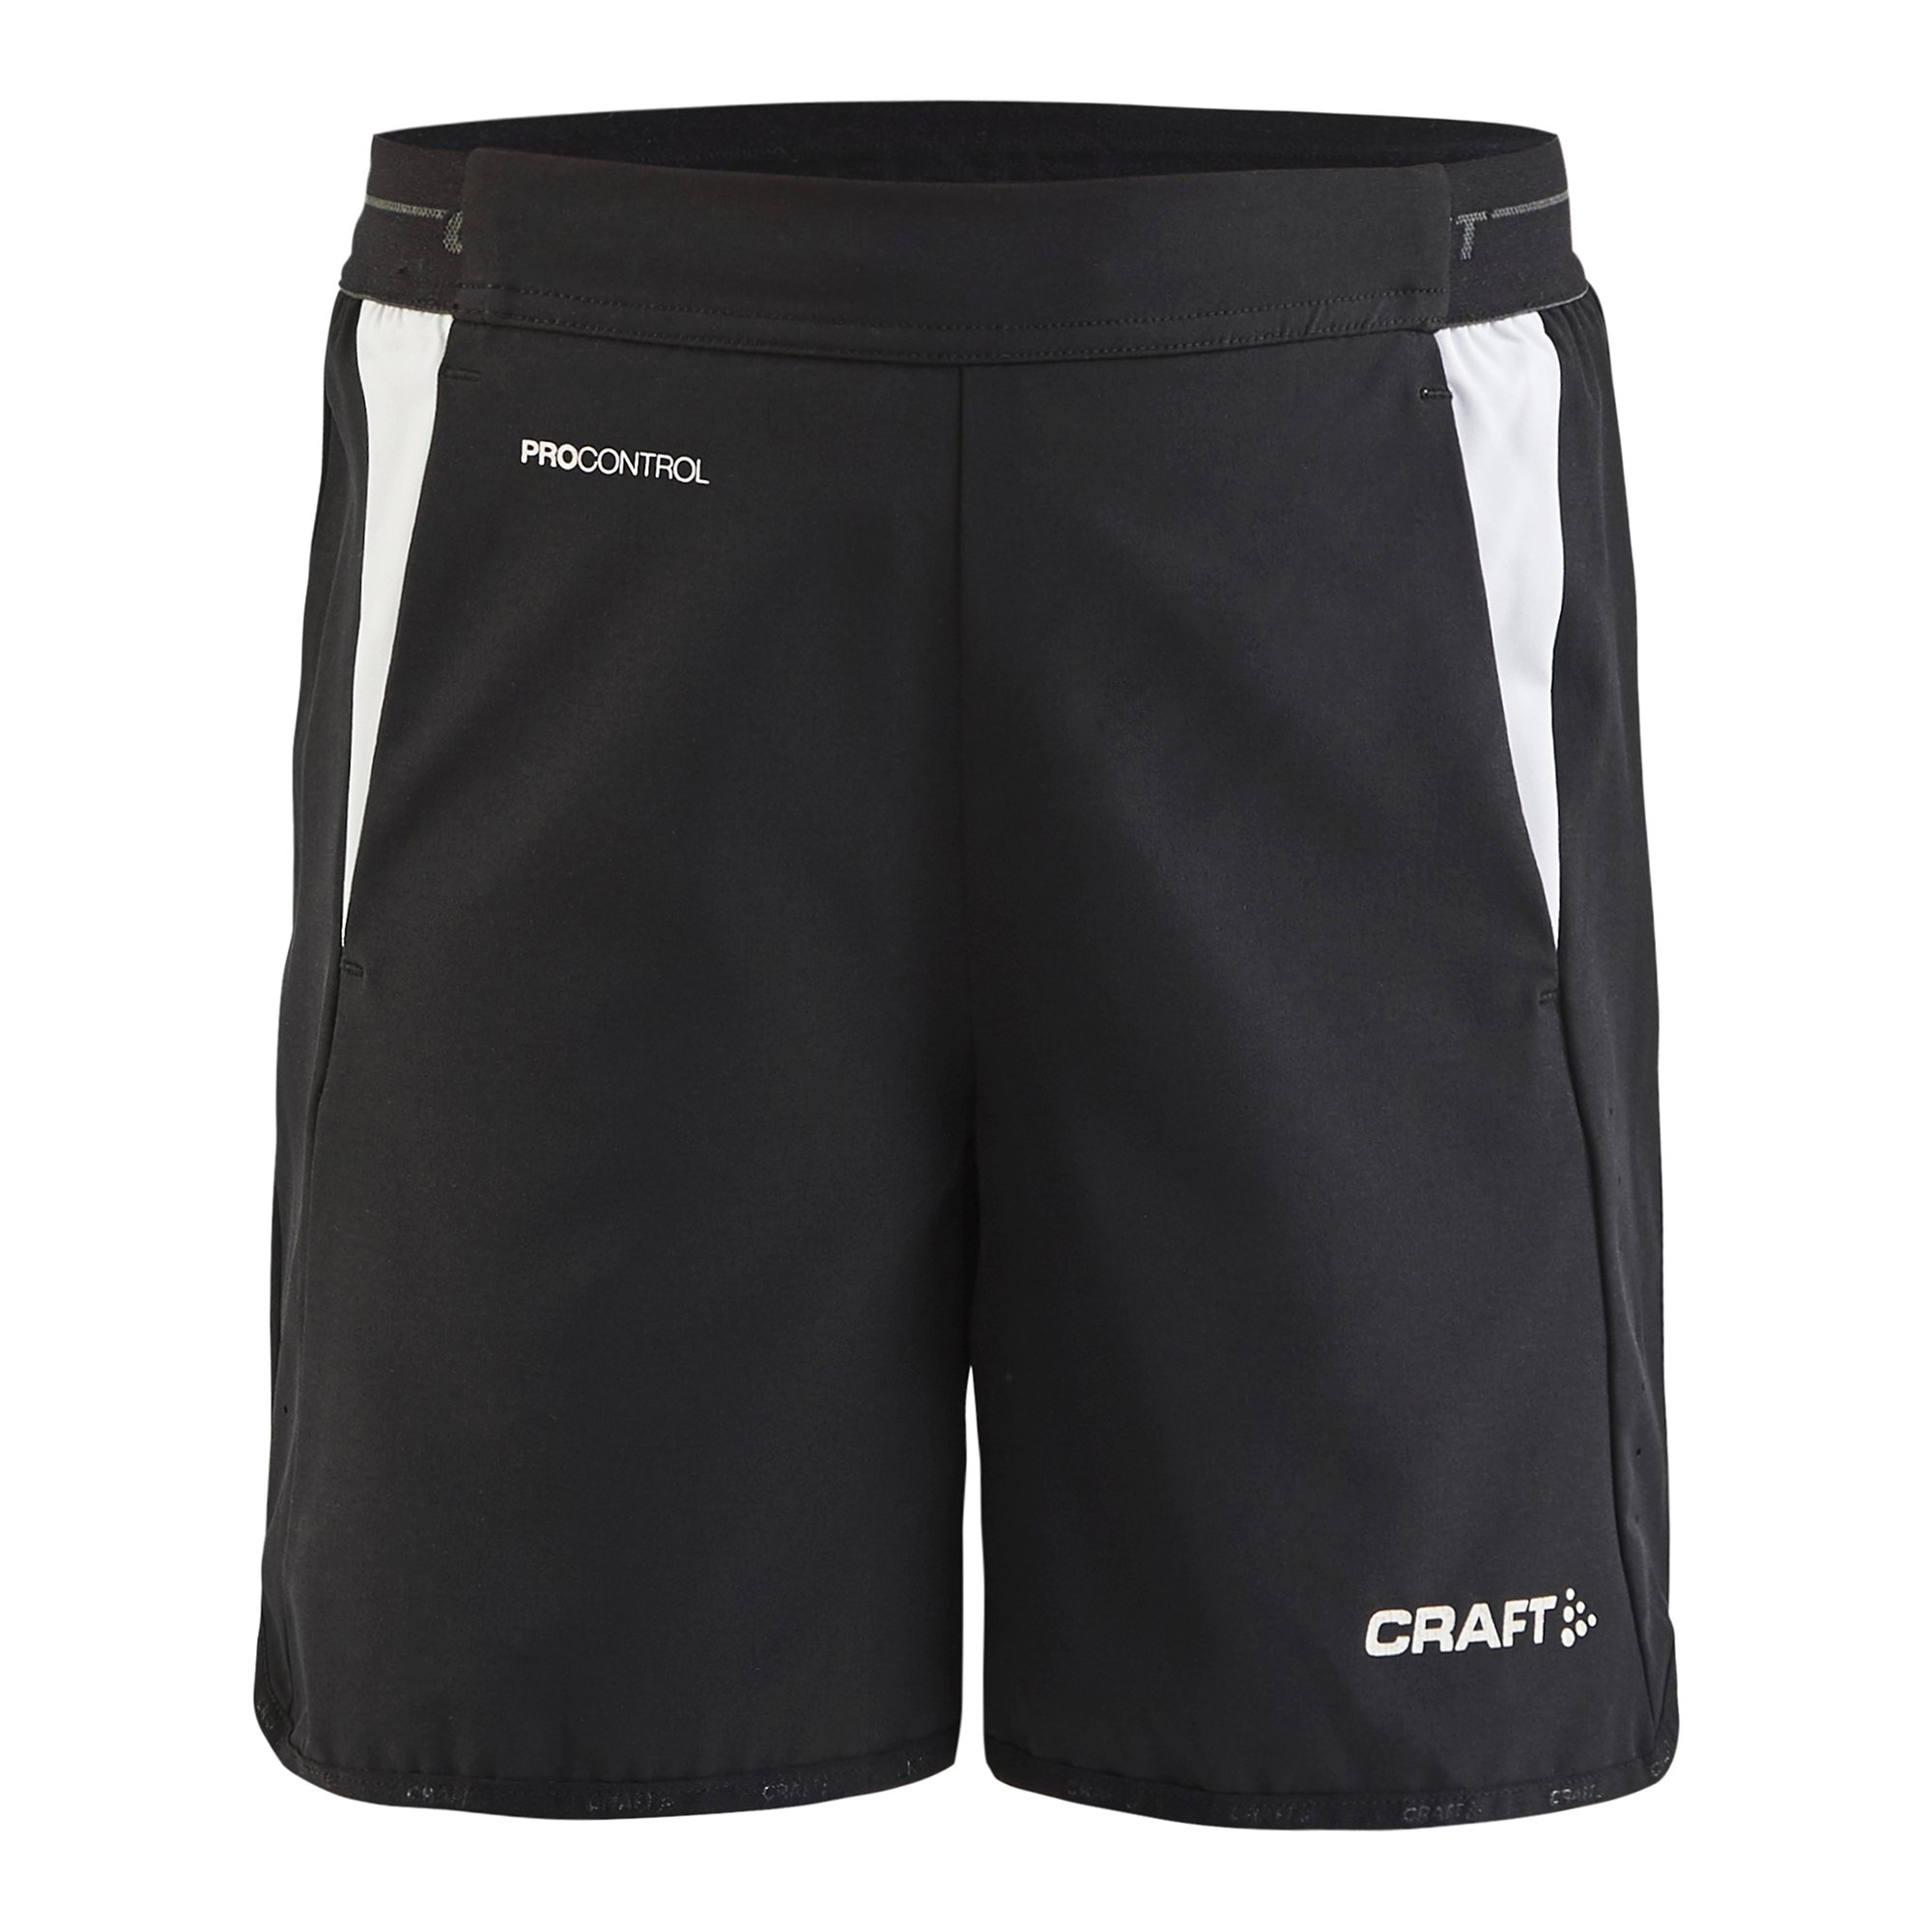 Craft Pro Control Impact Shorts